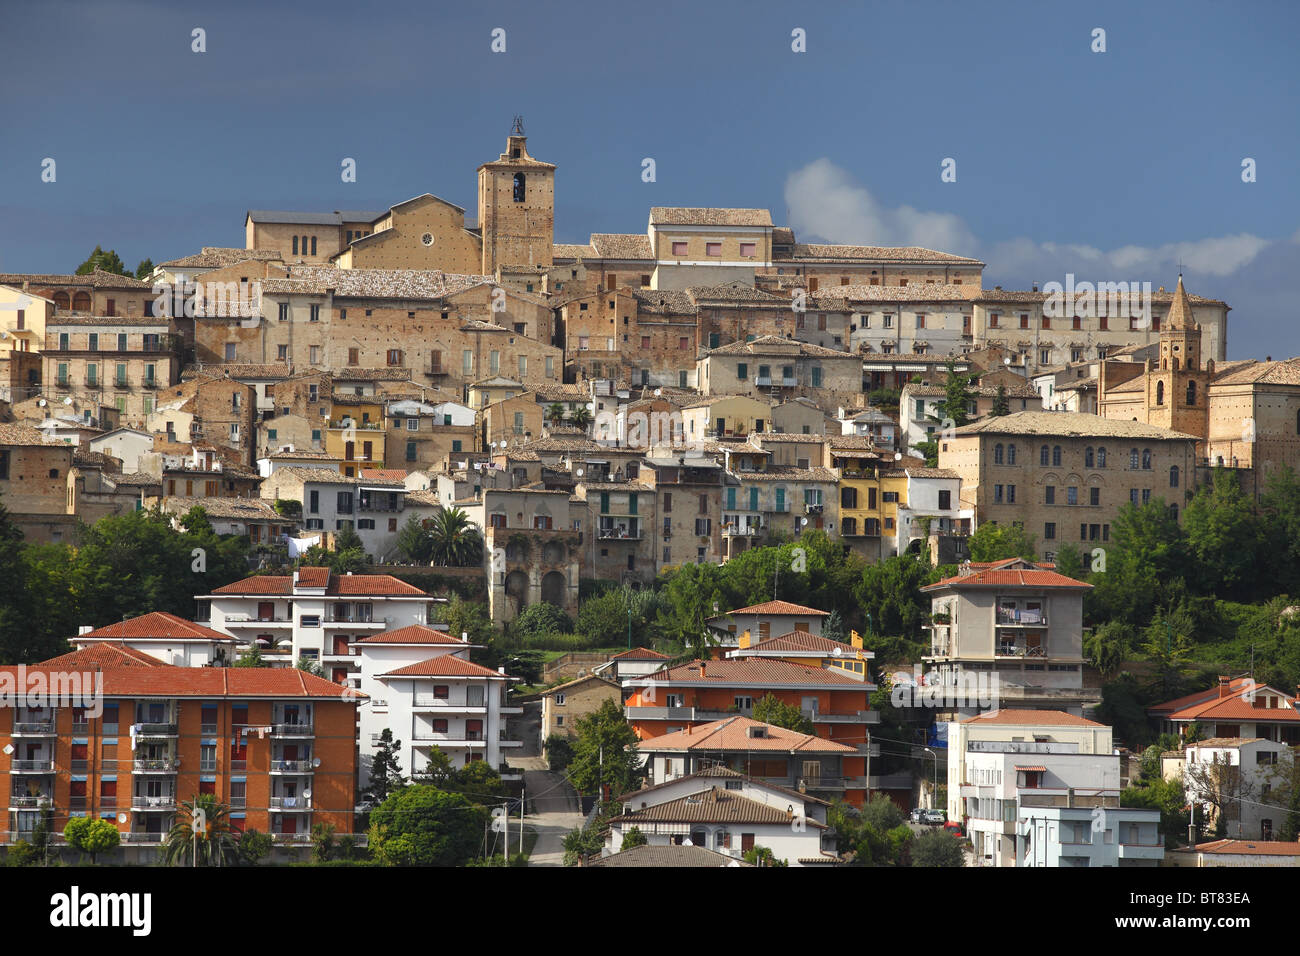 Penne in Abruzzo, Italy Stock Photo - Alamy